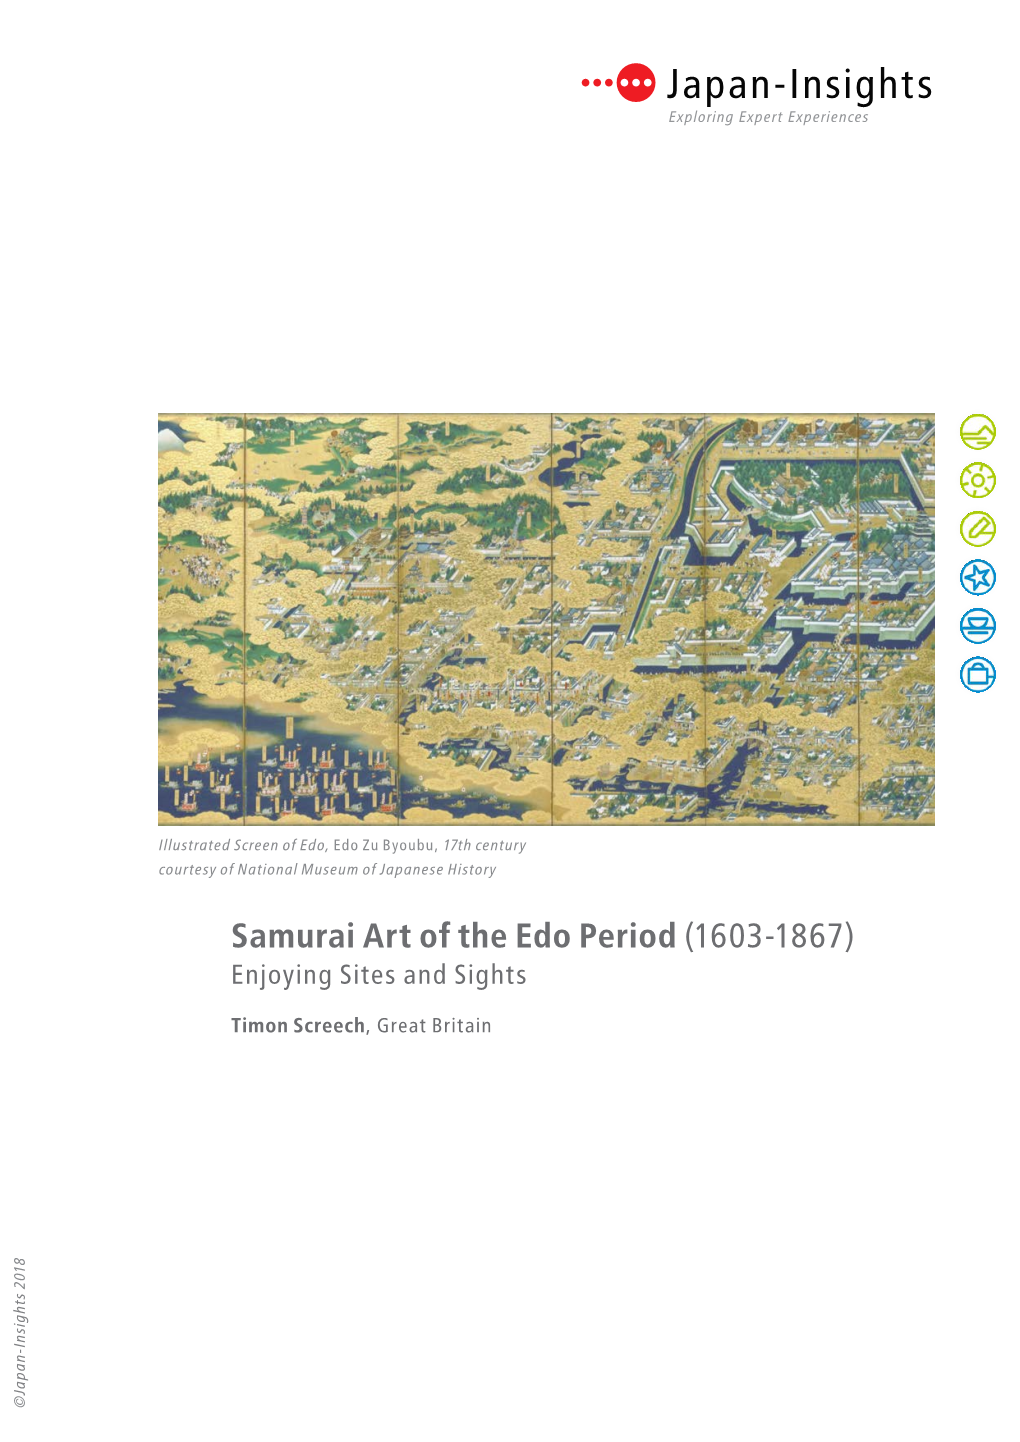 Samurai Art of the Edo Period (1603-1867) Enjoying Sites and Sights